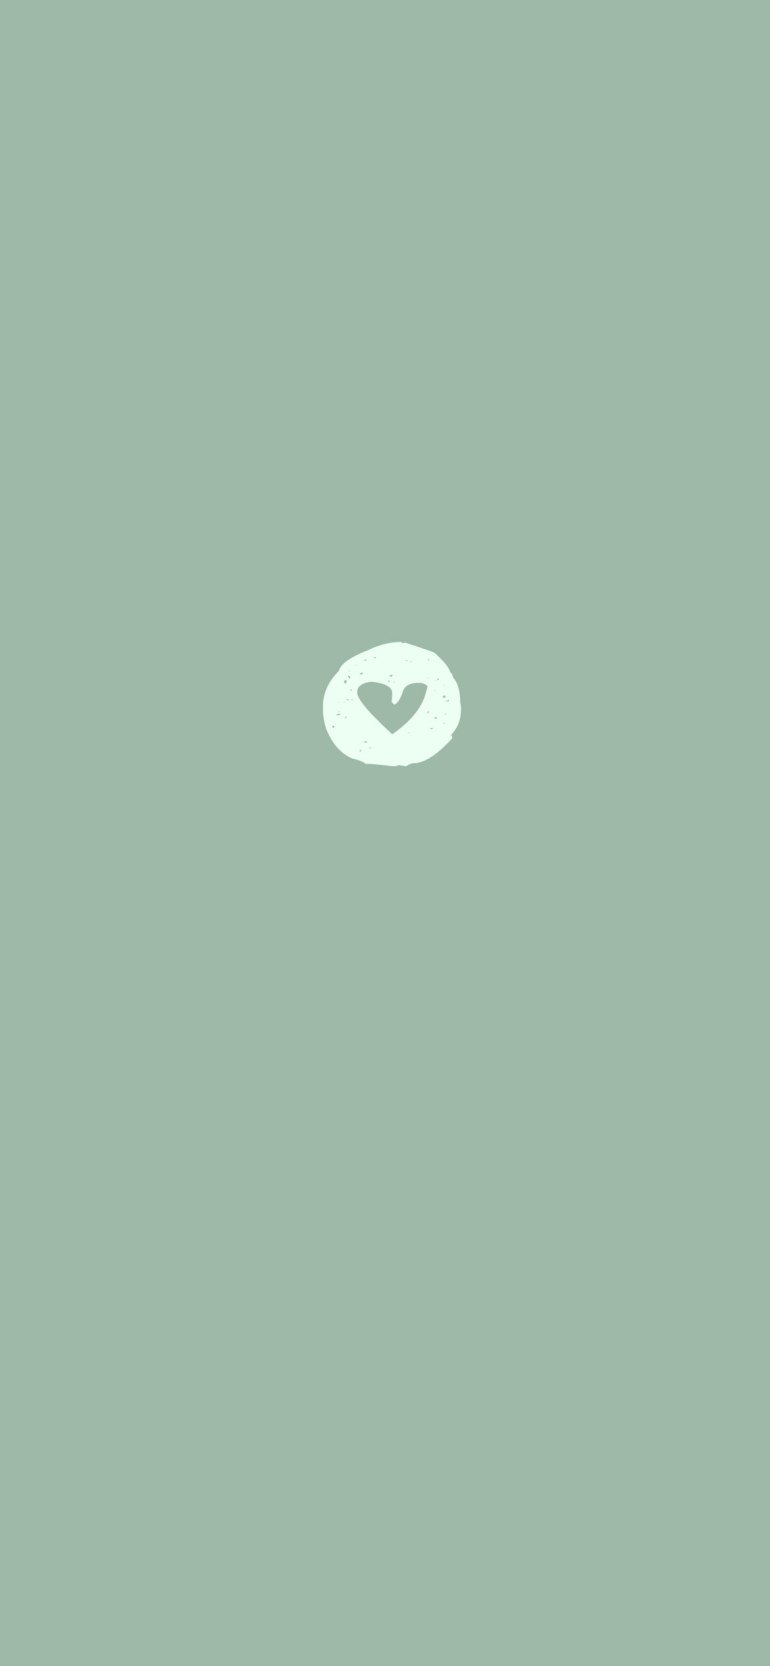 Sage Green Aesthetic Wallpaper Heart In Circle Idea